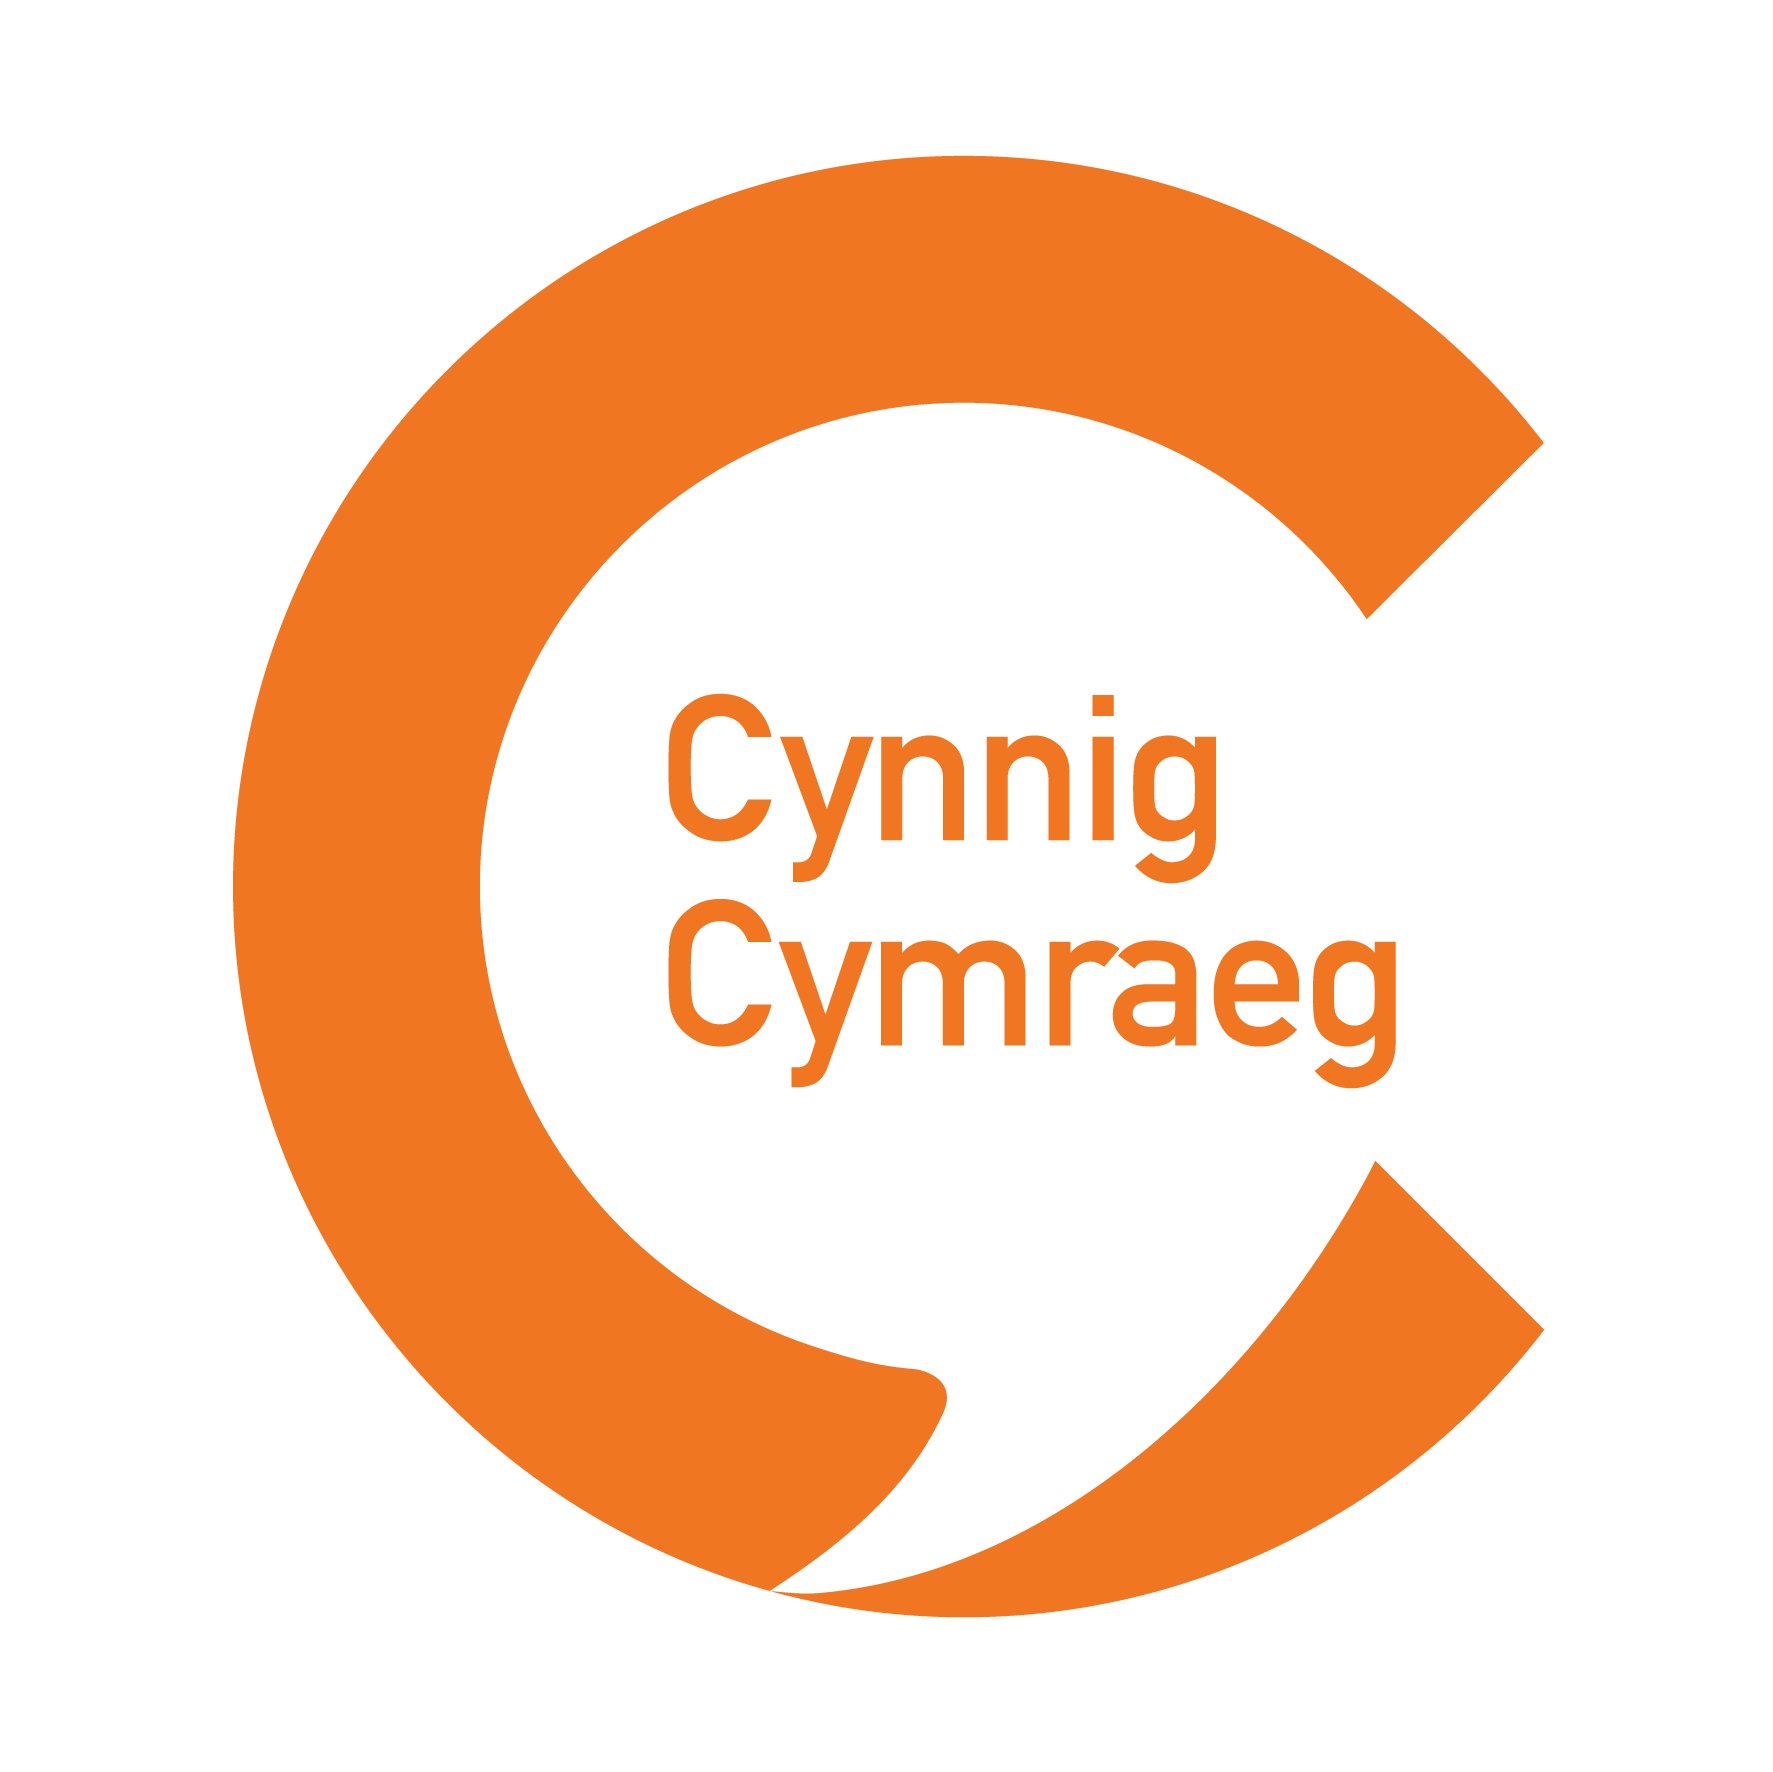 Cynnig Cymraeg recognition logo, orange text within a large capital C